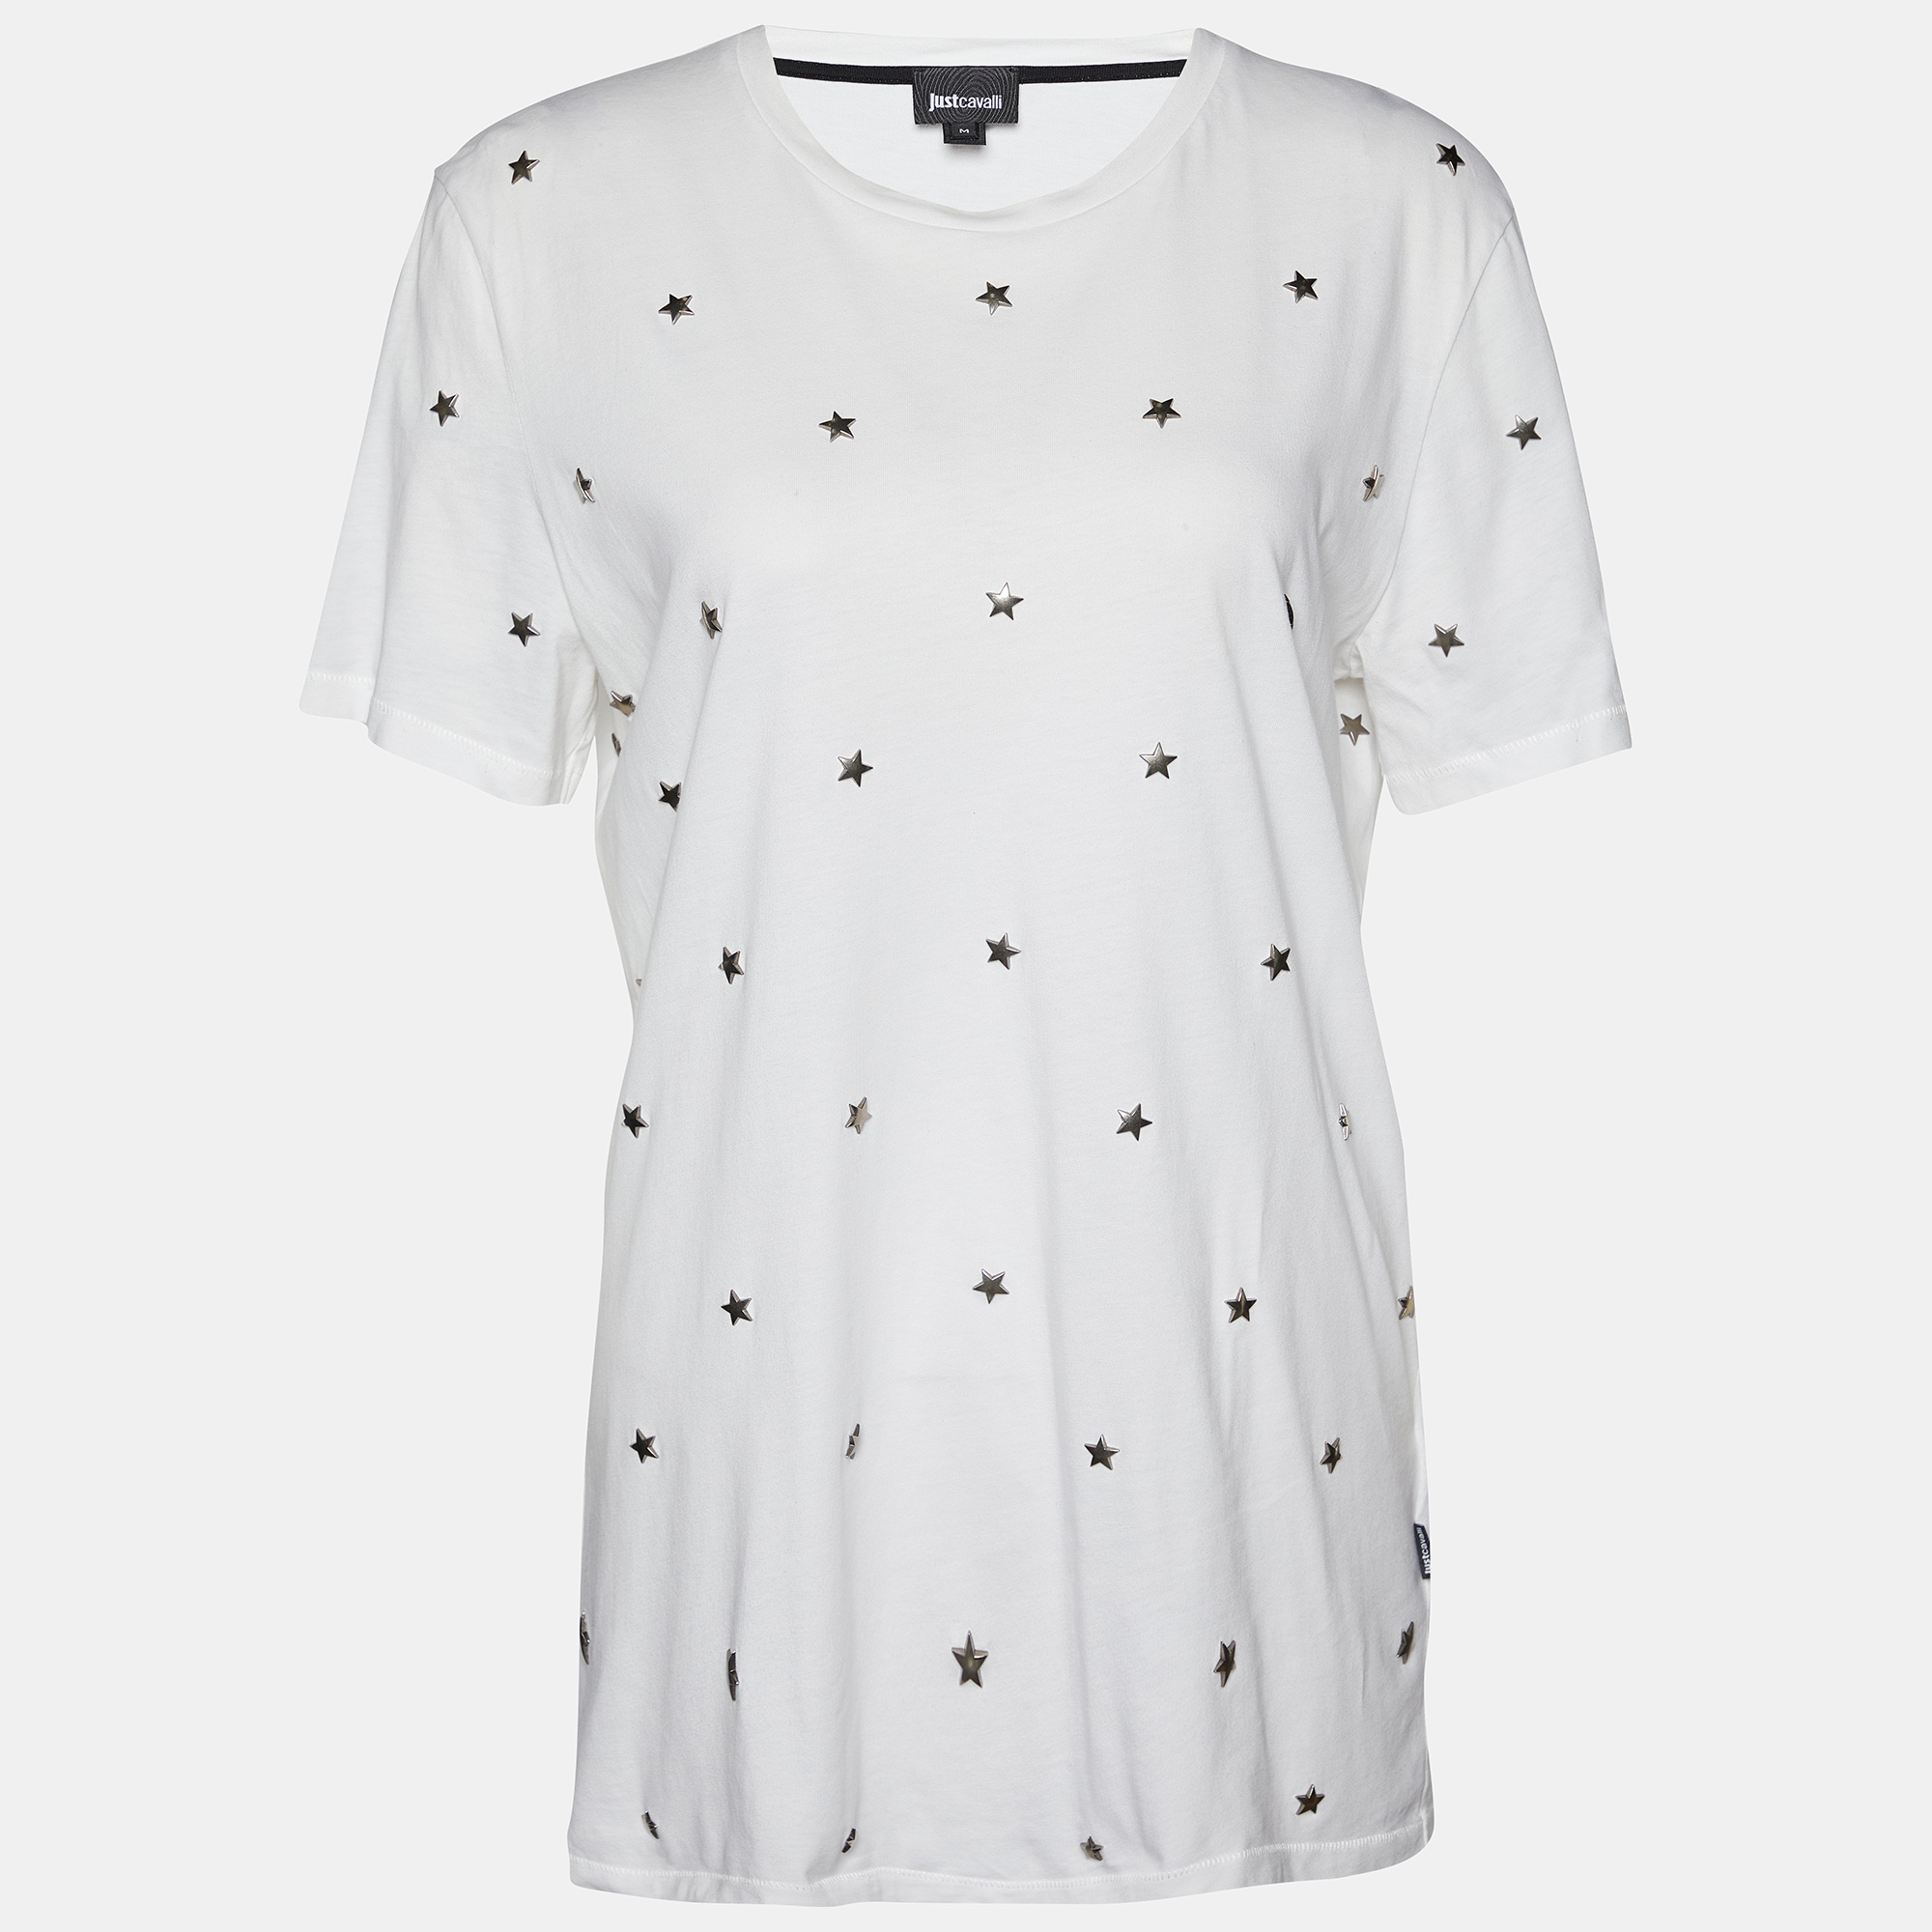 

Just Cavalli White Cotton Knit Star Studded T-Shirt